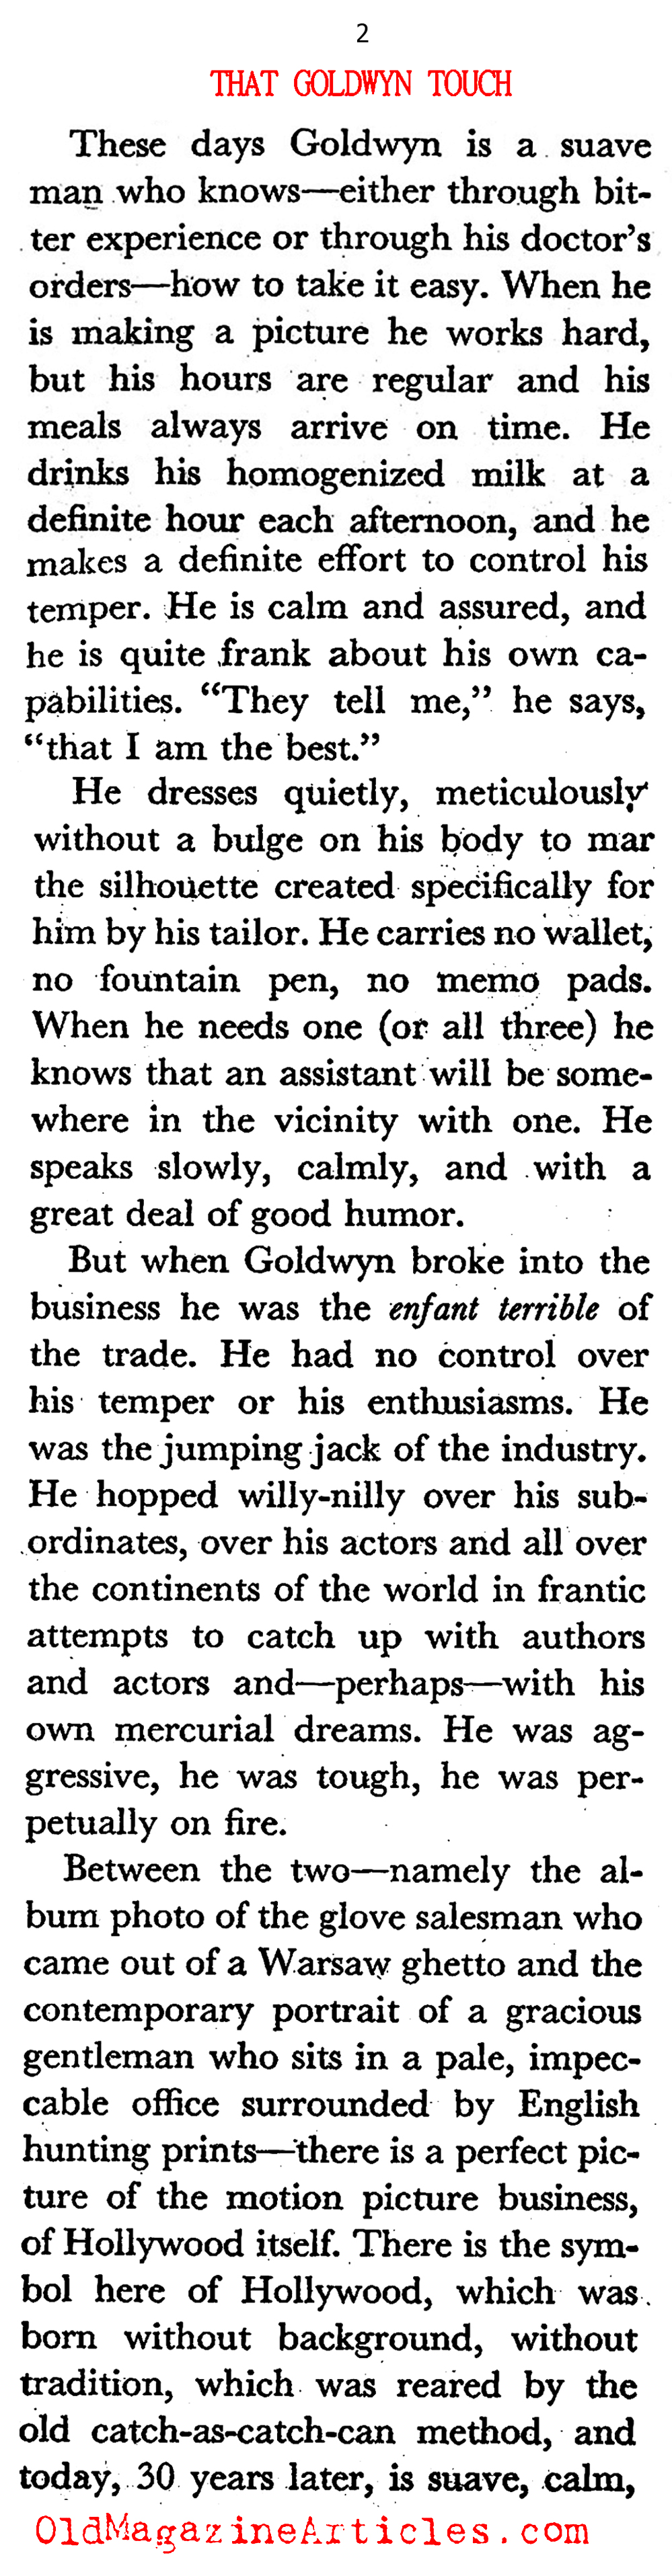 Samuel Goldwyn, Producer (Coronet Magazine, 1944)